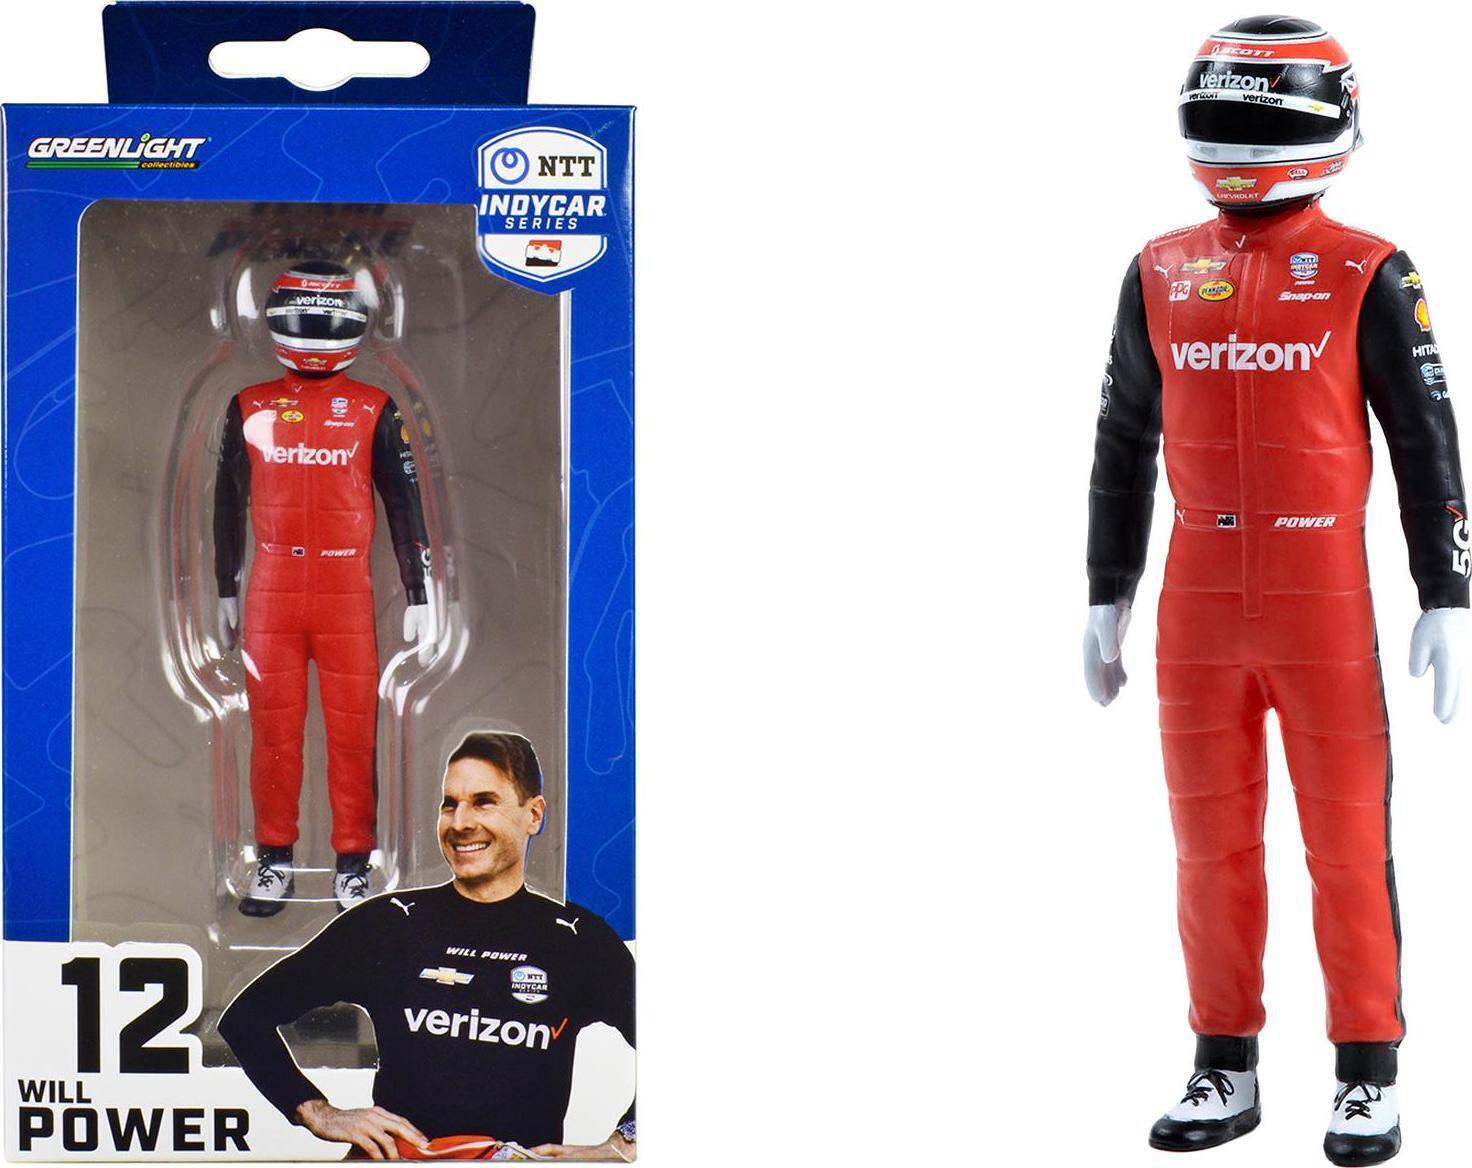 NTT IndyCar Series #12 Will Power Driver Figure Verizon 5G - Team Penske For By